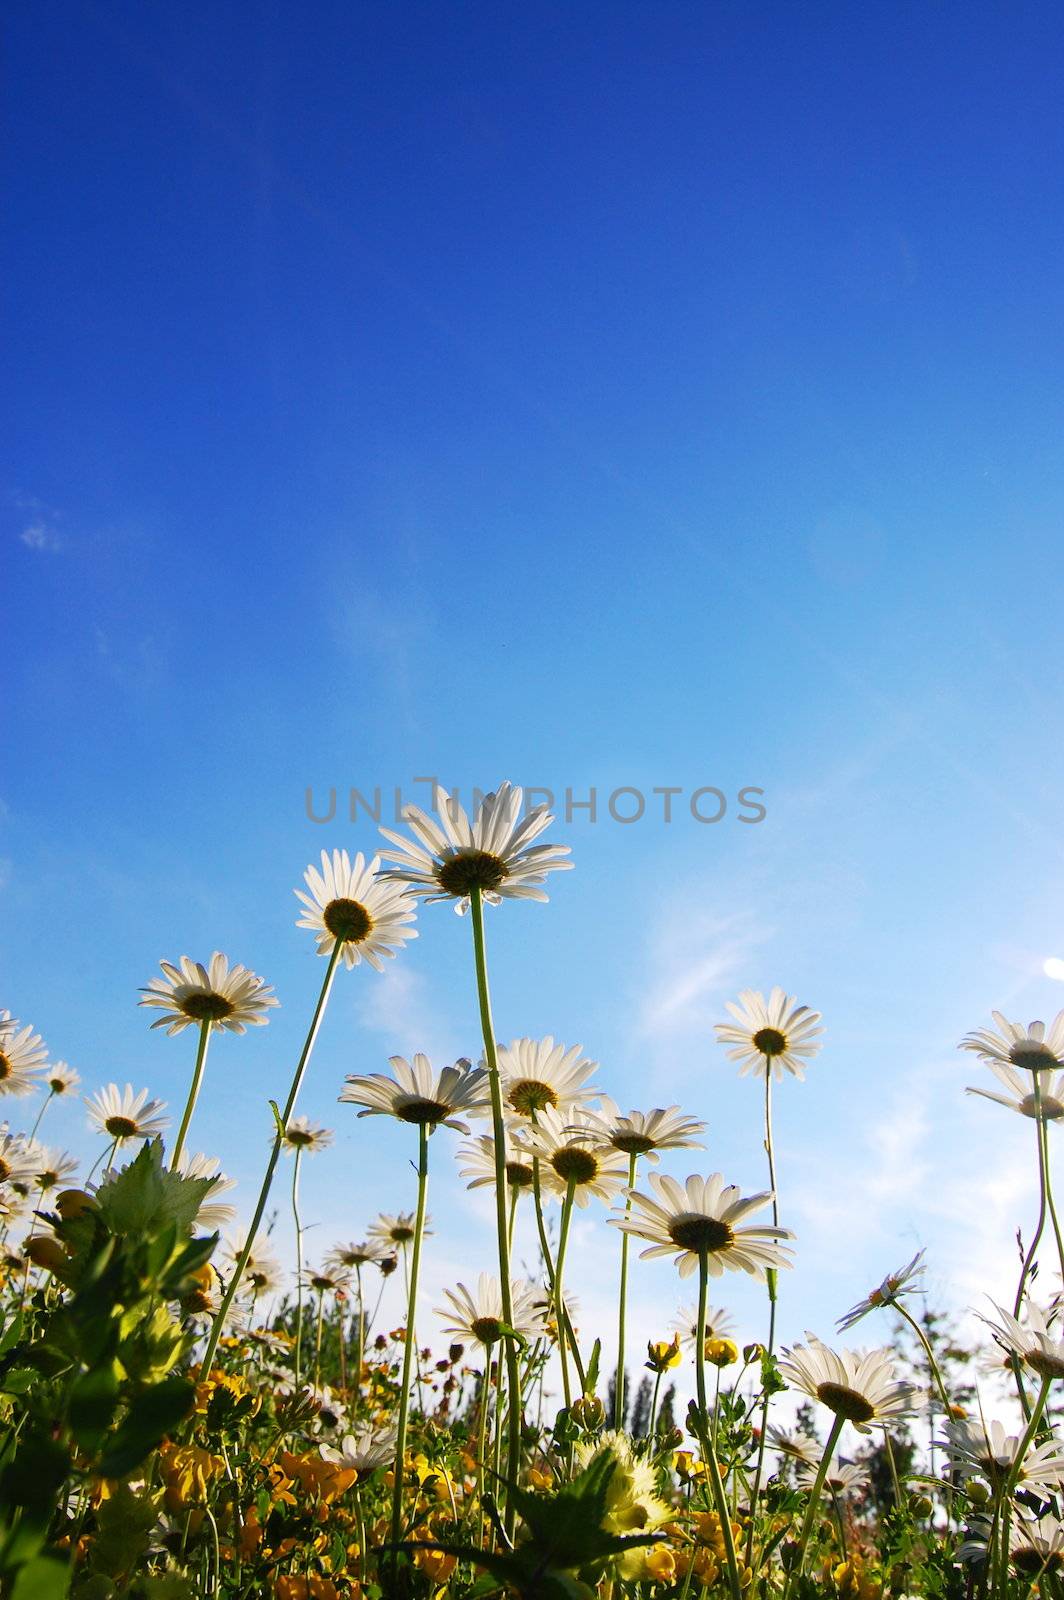 flower in summer under blue sky by gunnar3000